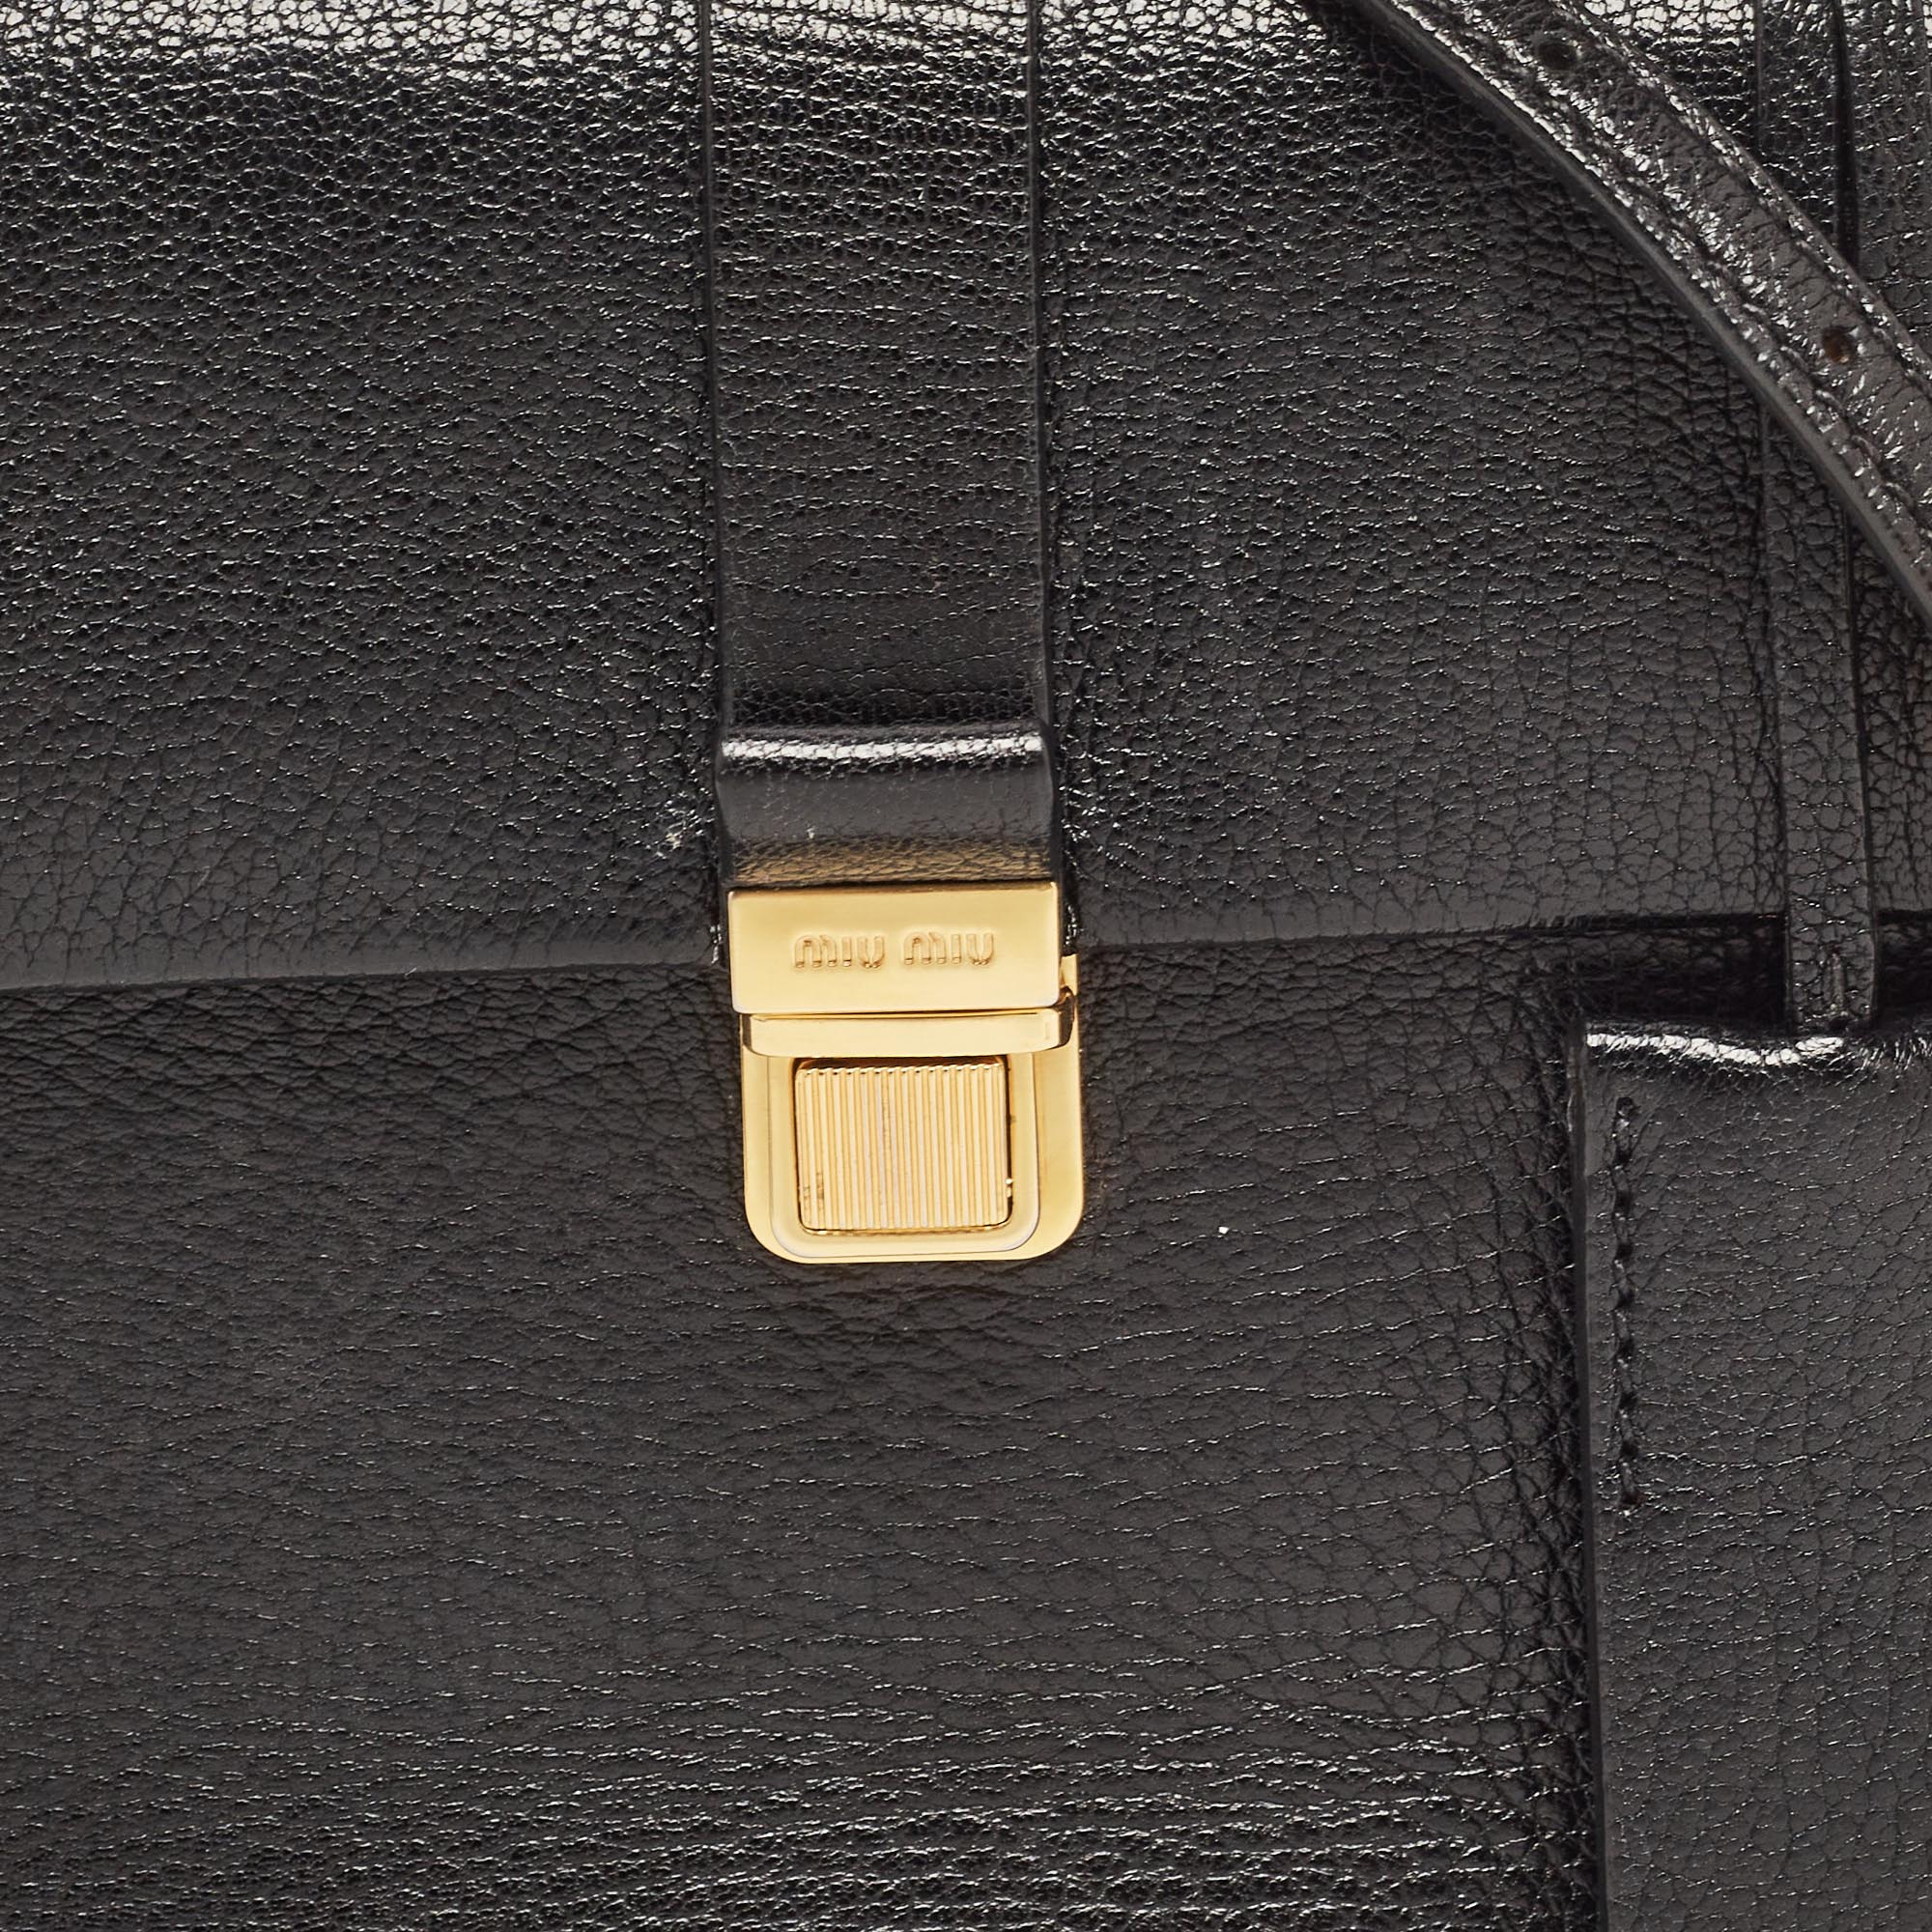 Miu Miu Black Madras Leather Mini Bandouliera Top Handle Bag